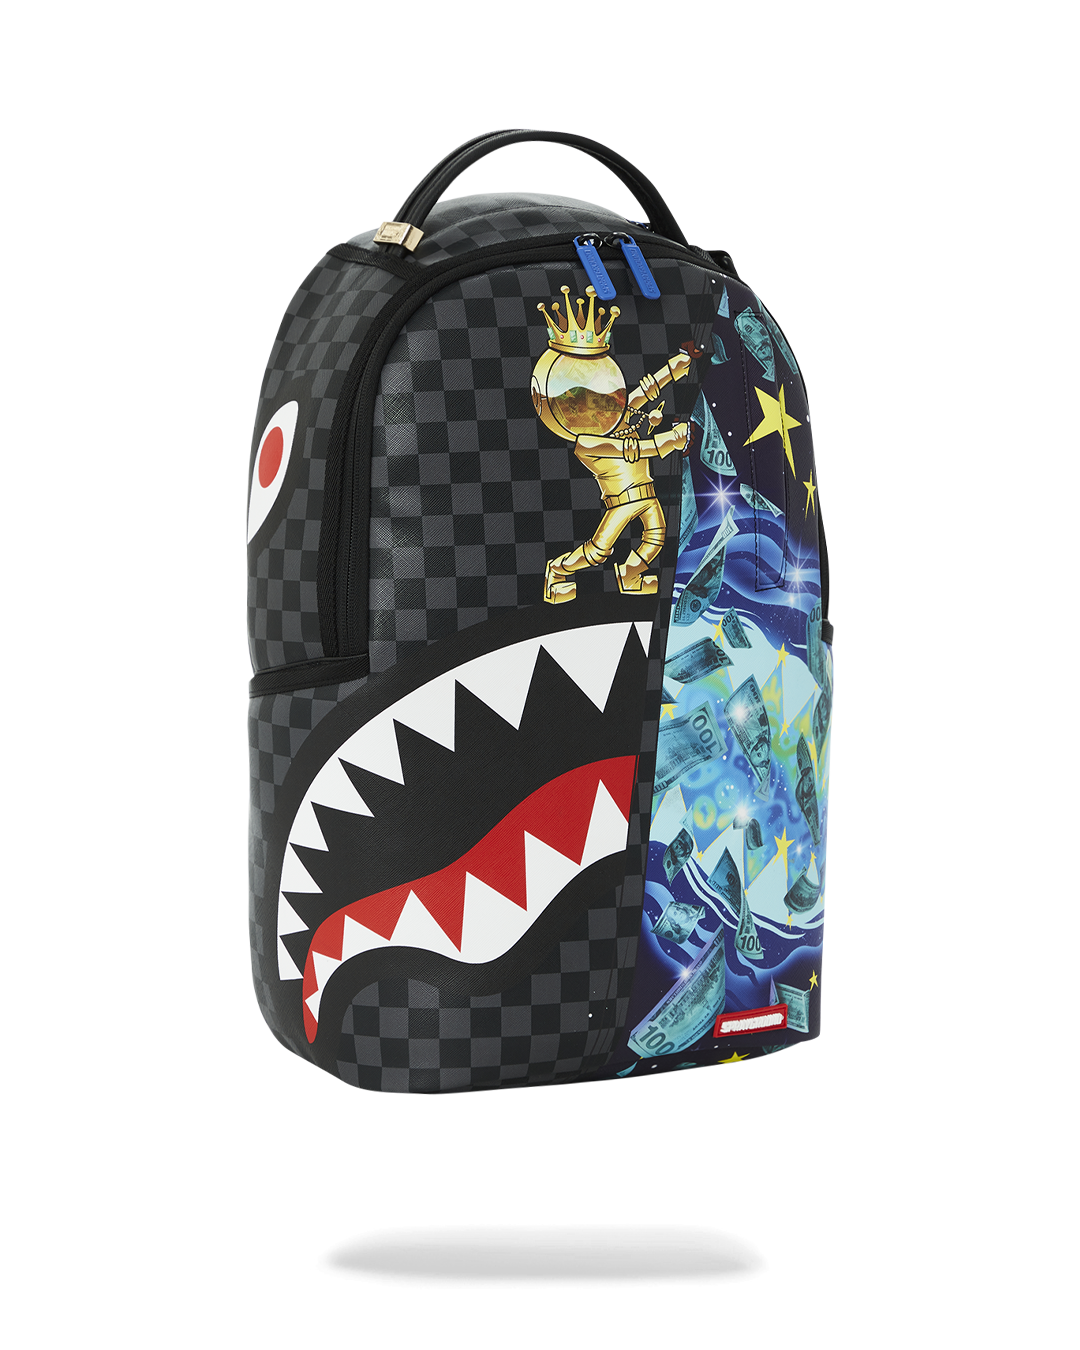 Bape Backpack Shark - Shop on Pinterest